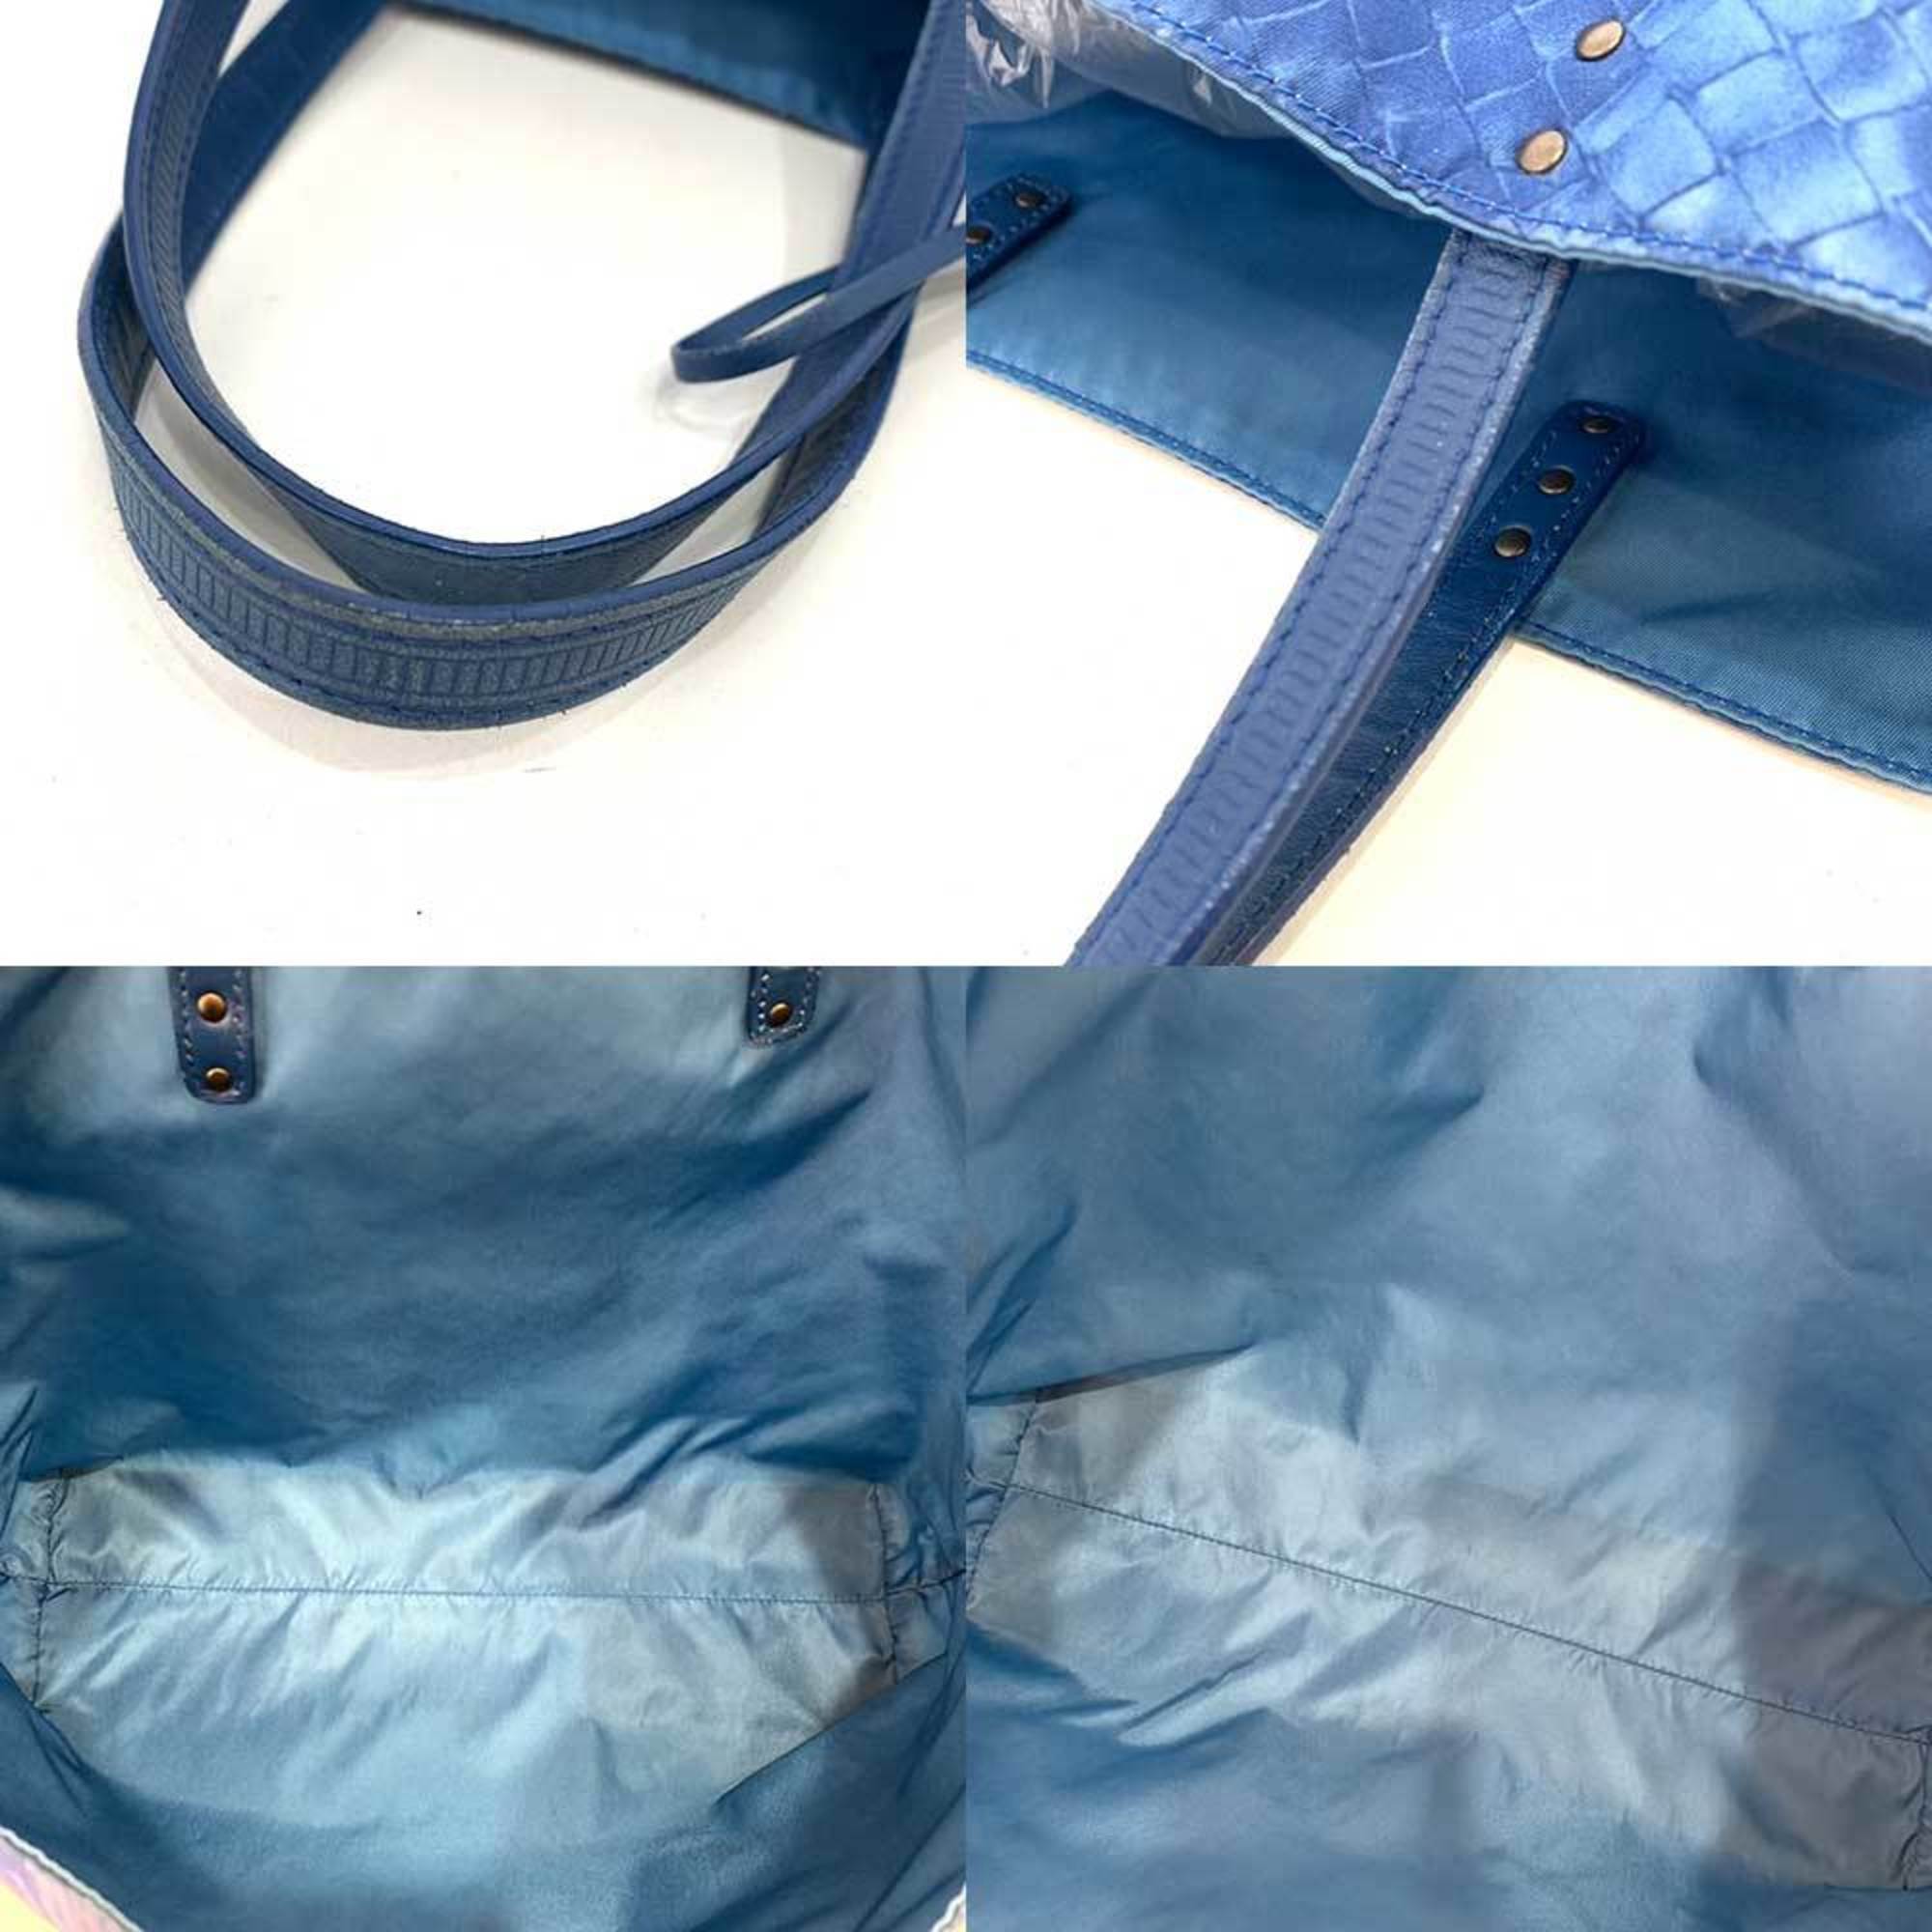 Bottega Veneta Bag Intrecciolusion Medium Tote Blue Men's Women's Nylon x Leather 299875 BOTTEGAVENETA